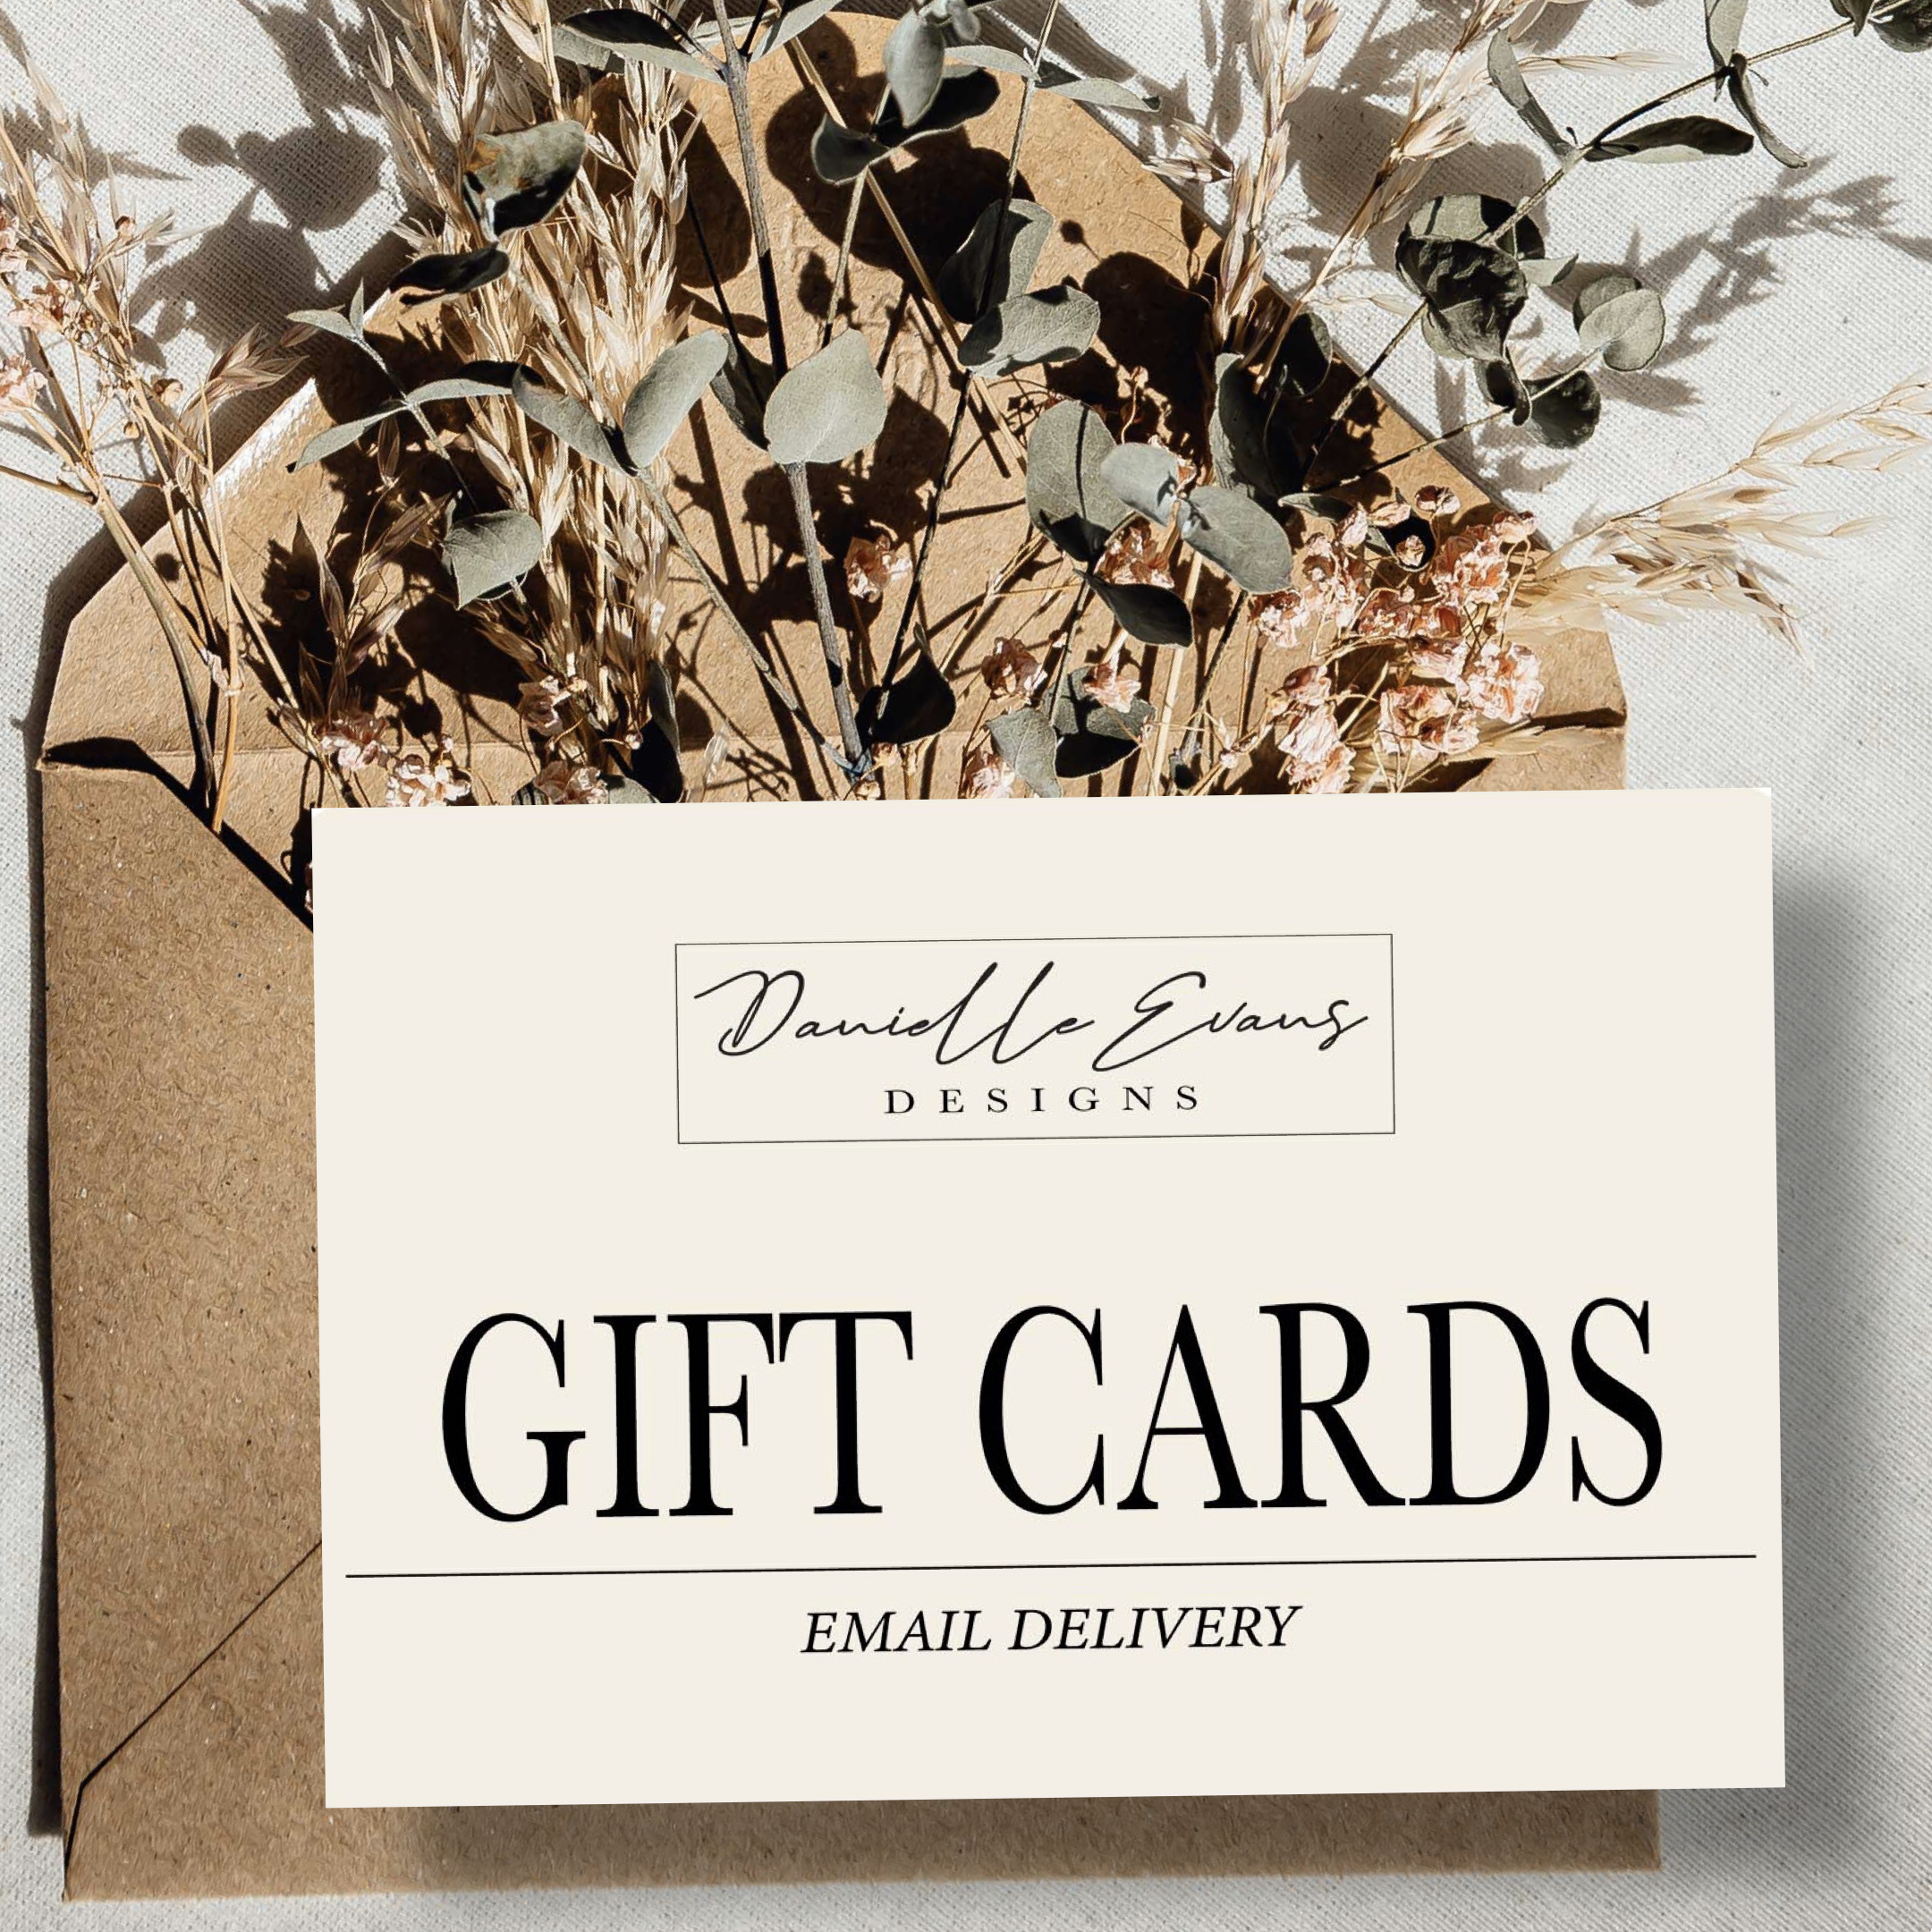 Digital Danielle Evans Designs Gift Card